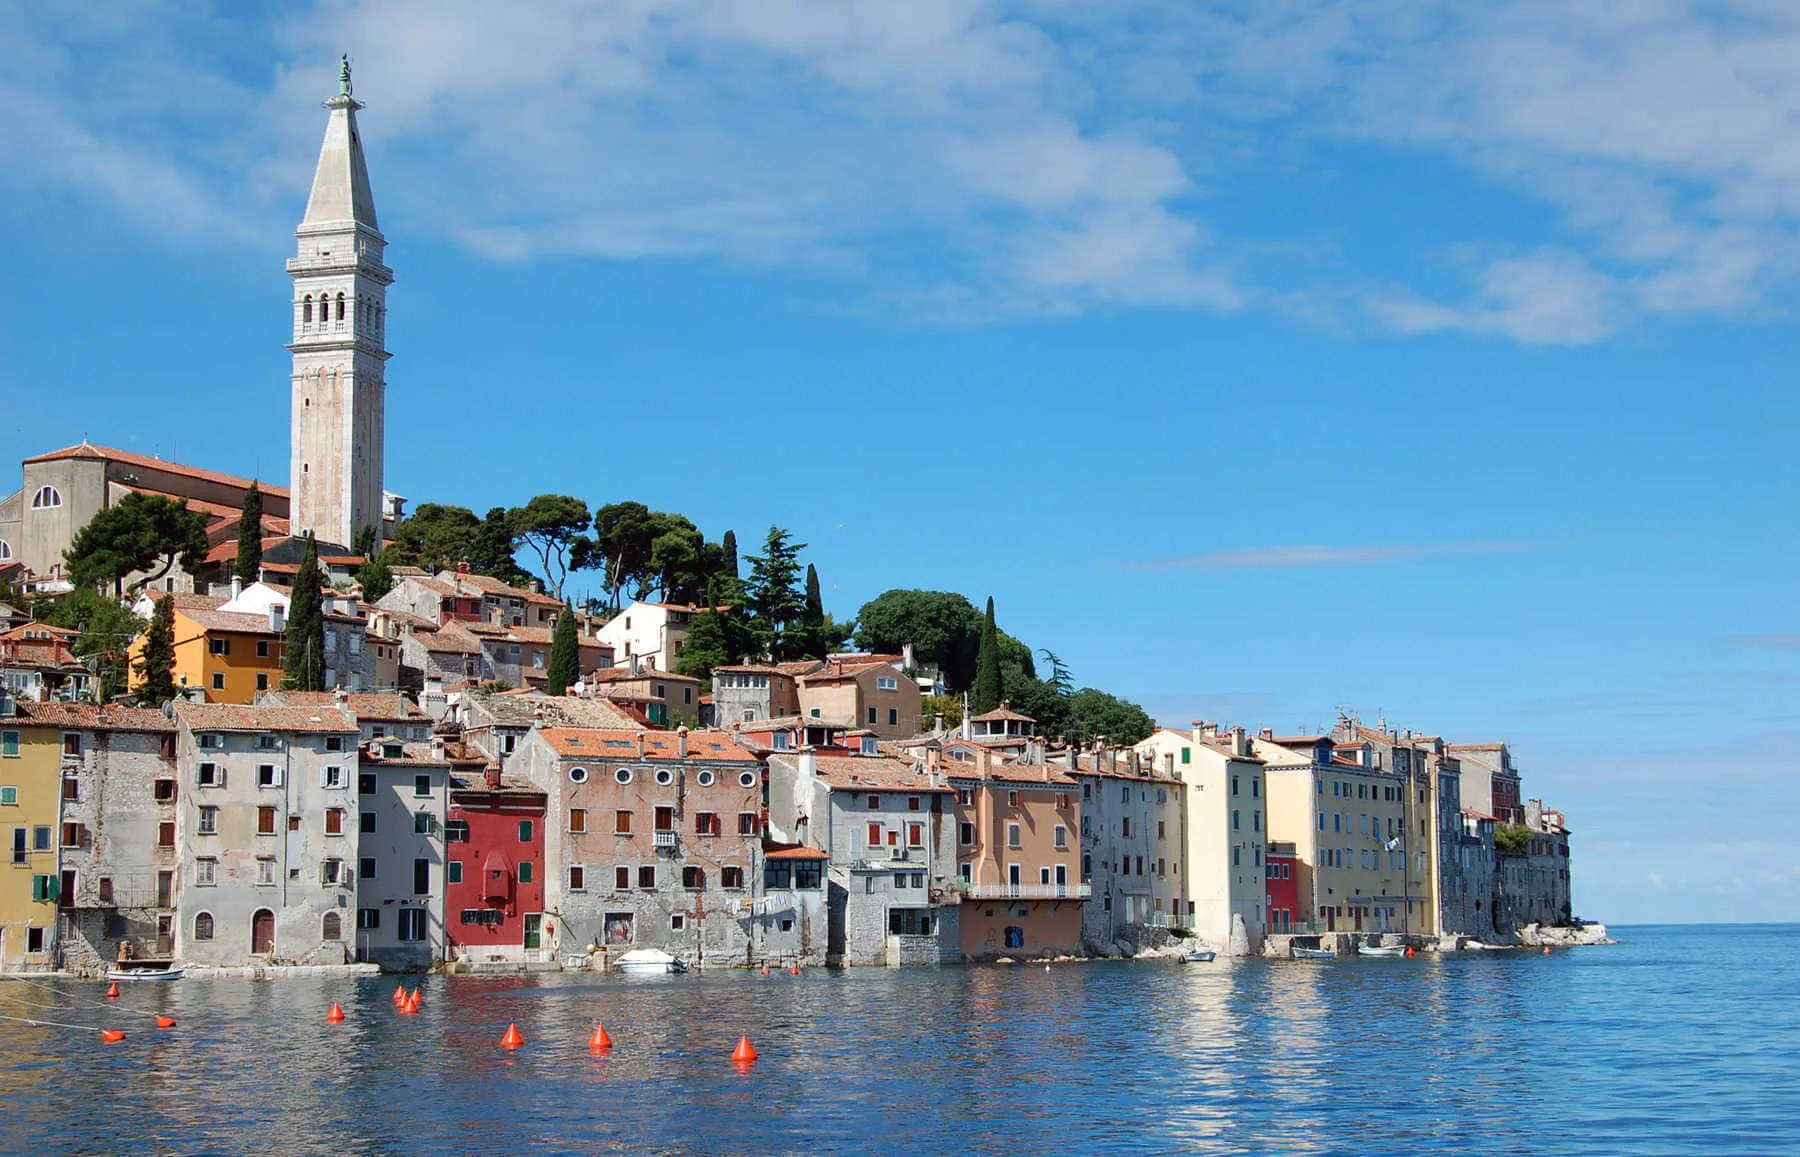 Croatia’s romantic Rovinj is like a little Venice on a hill